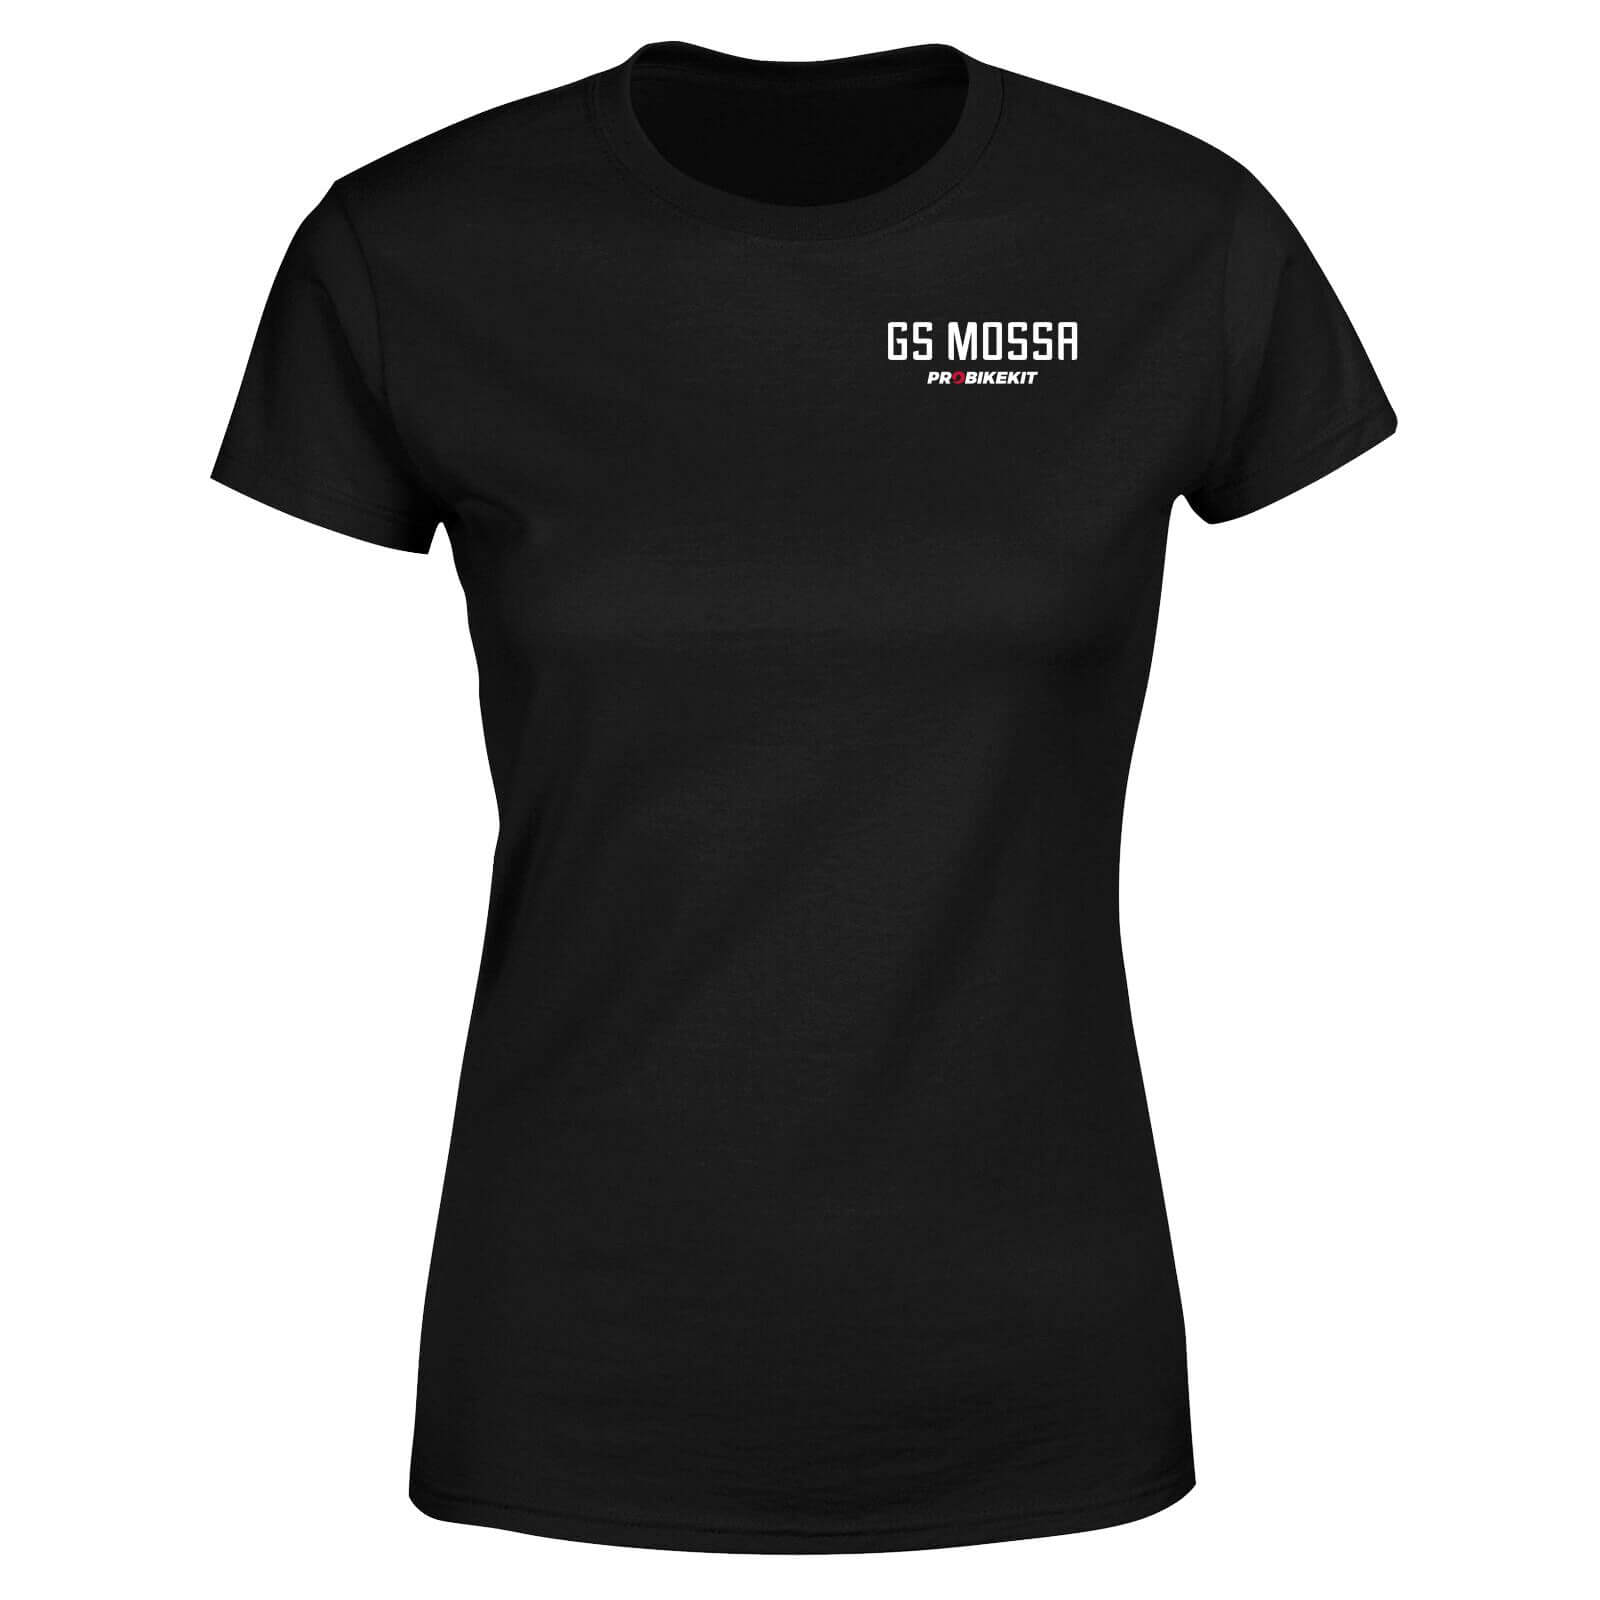 PBK GS Mossa Pocket Print Aqua Wave Women's T-Shirt - Black - M - Black